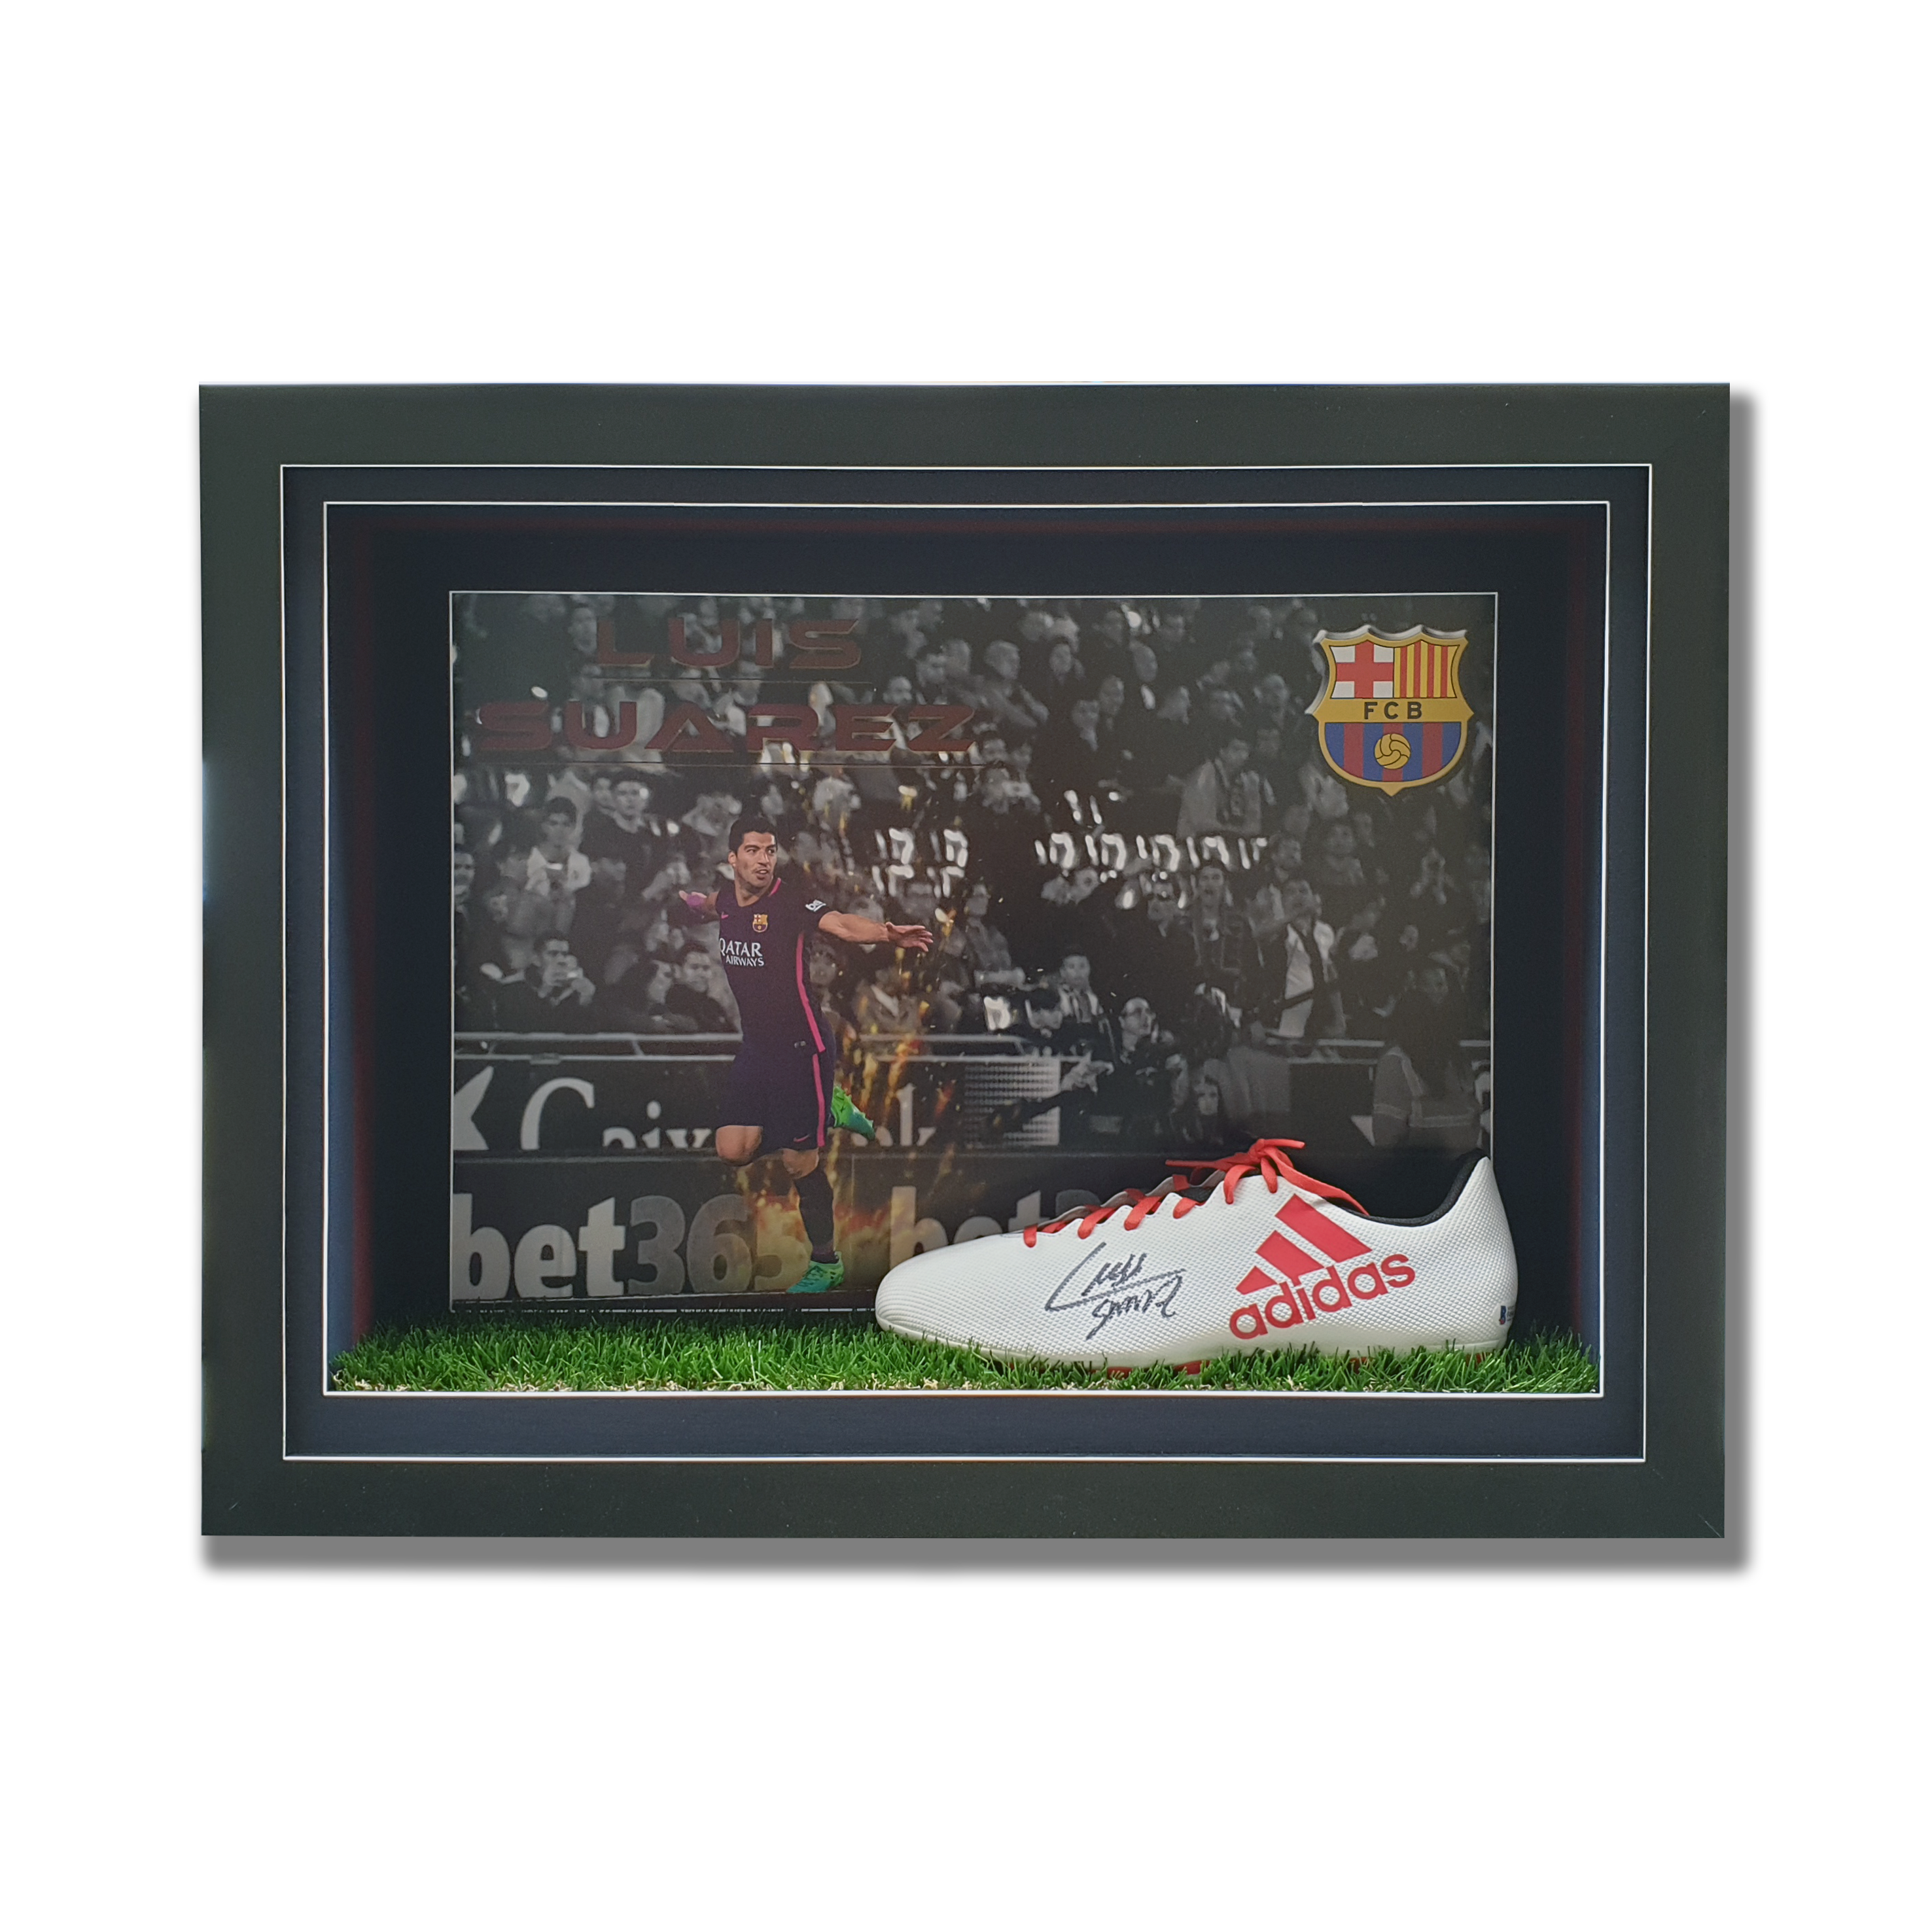 New Luis Suarez Signed Limited Edition Memorabilia Framed 